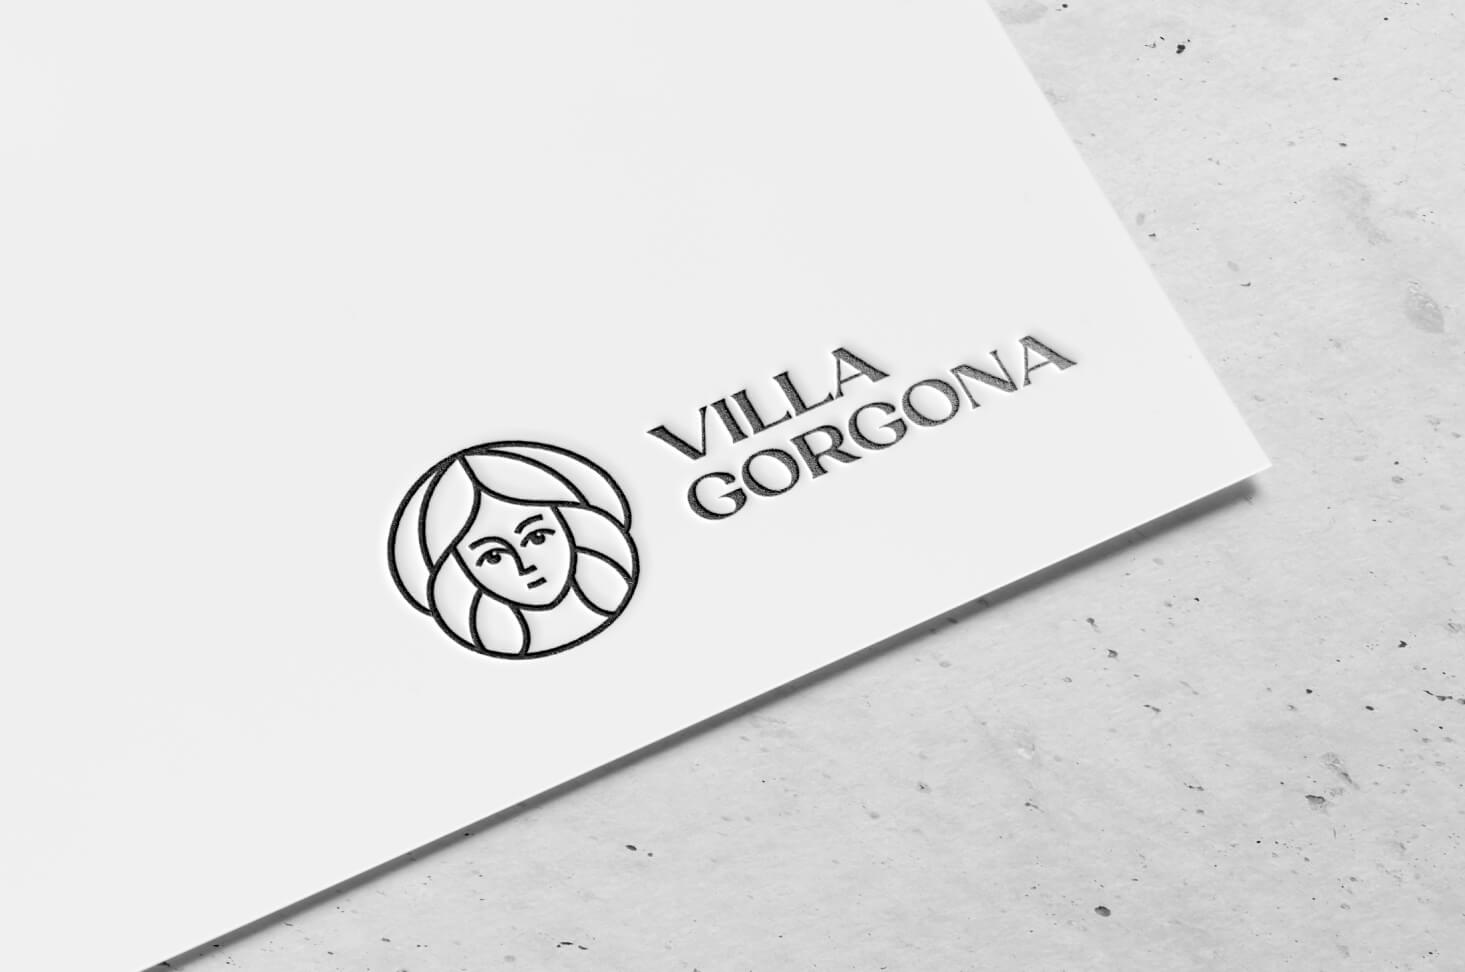 villa-gordona-logo7.jpg